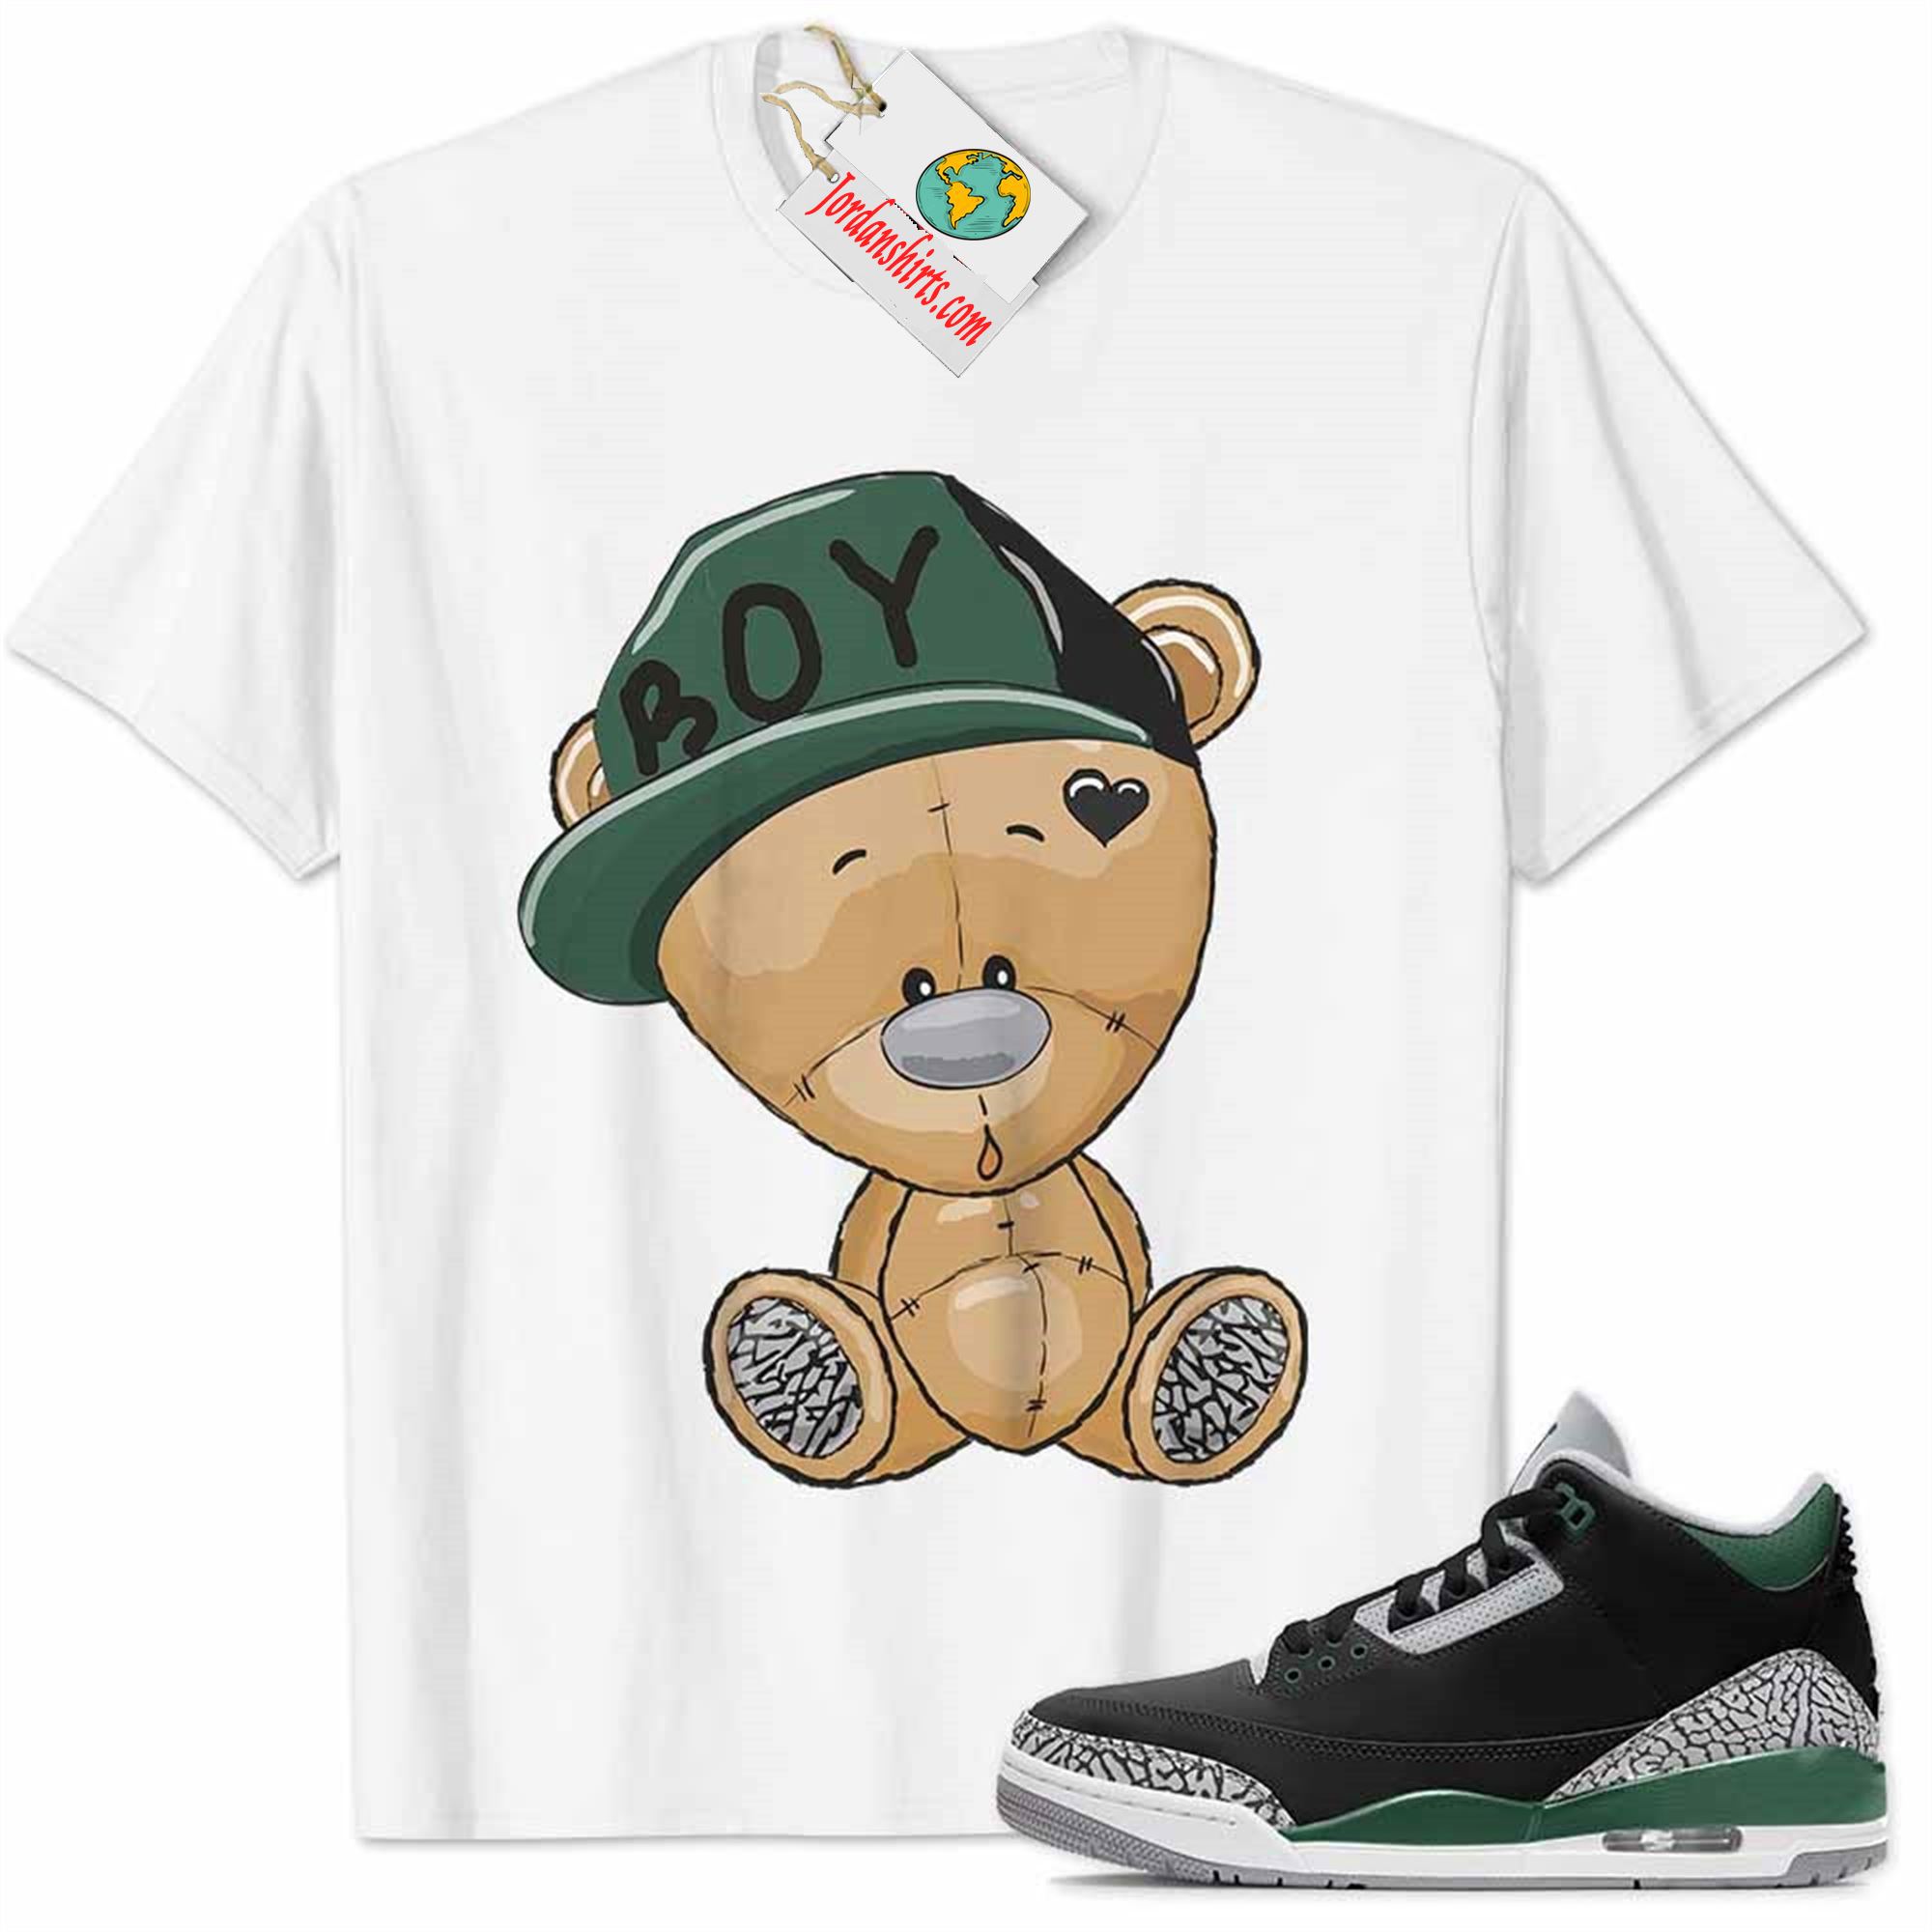 Jordan 3 Shirt, Jordan 3 Pine Green Shirt Cute Baby Teddy Bear White Full Size Up To 5xl